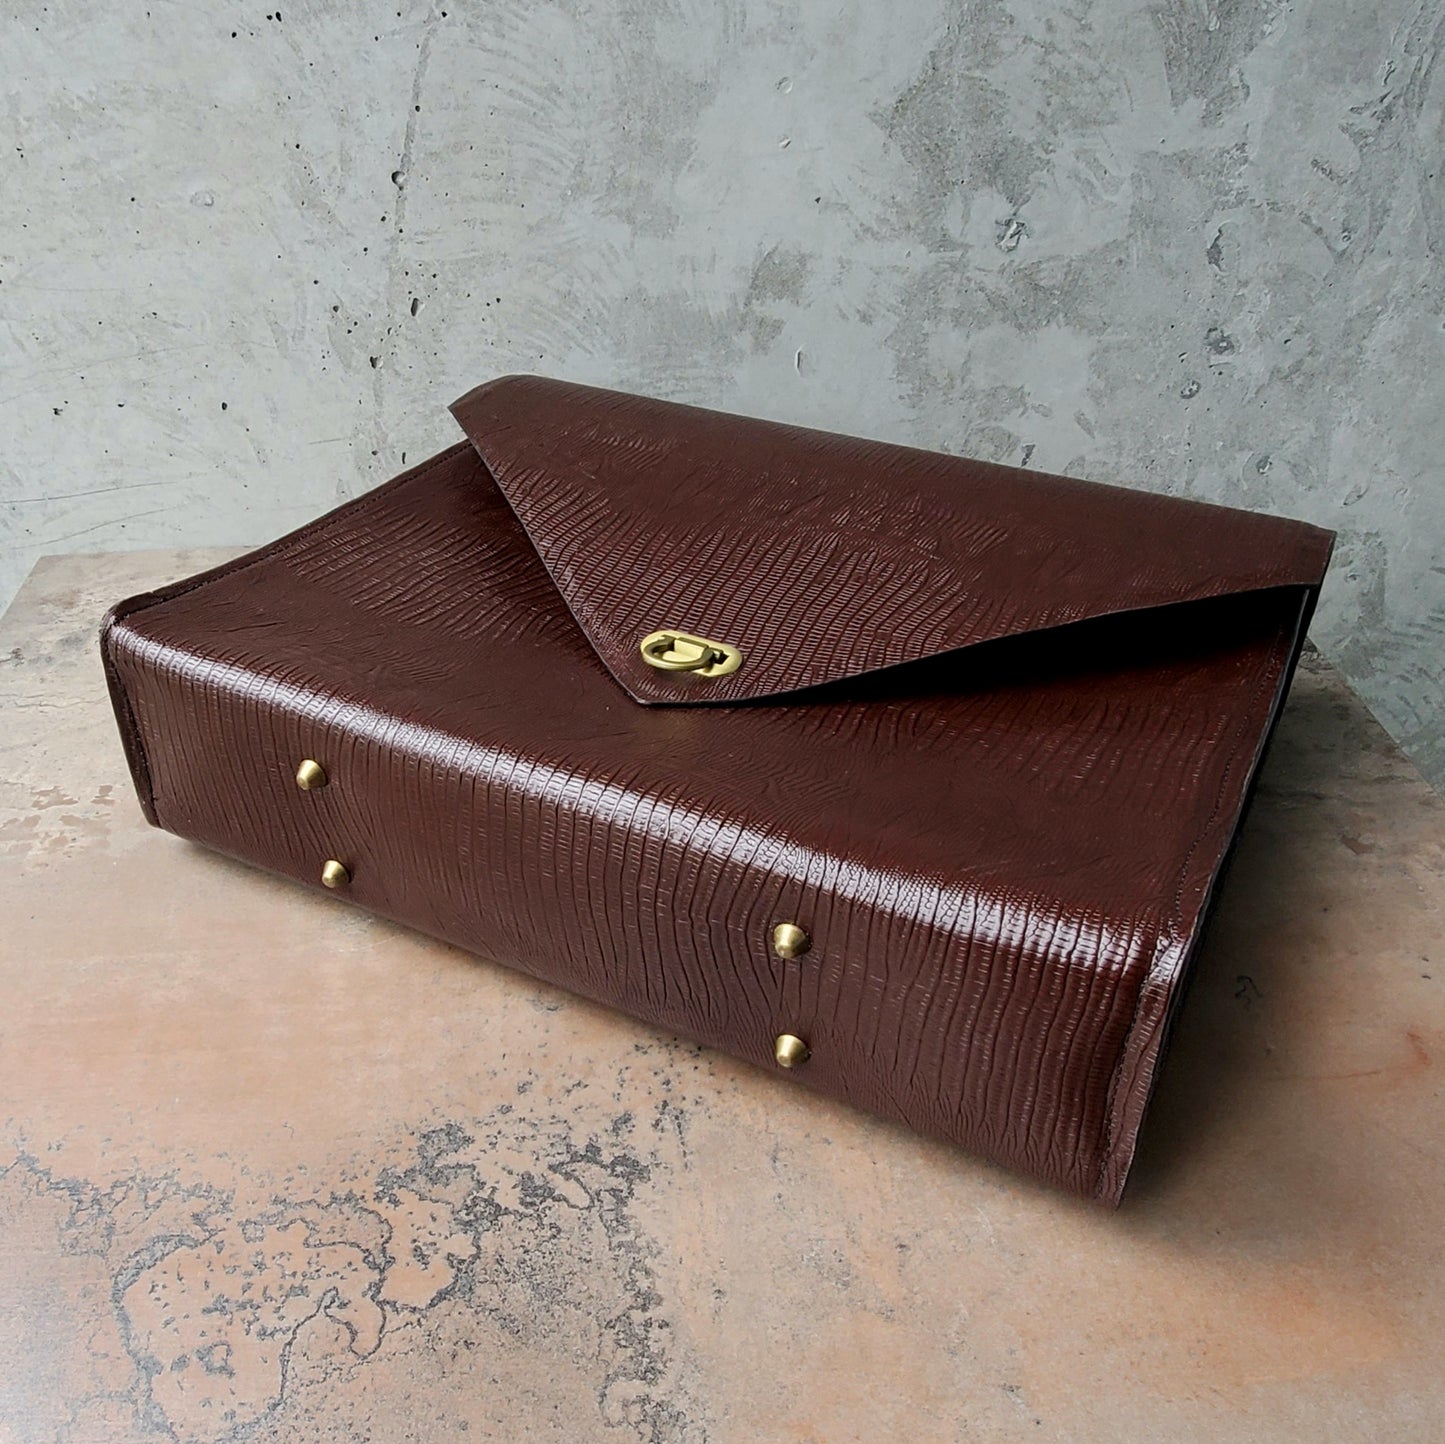 CM Convertible Briefcase - 1of1